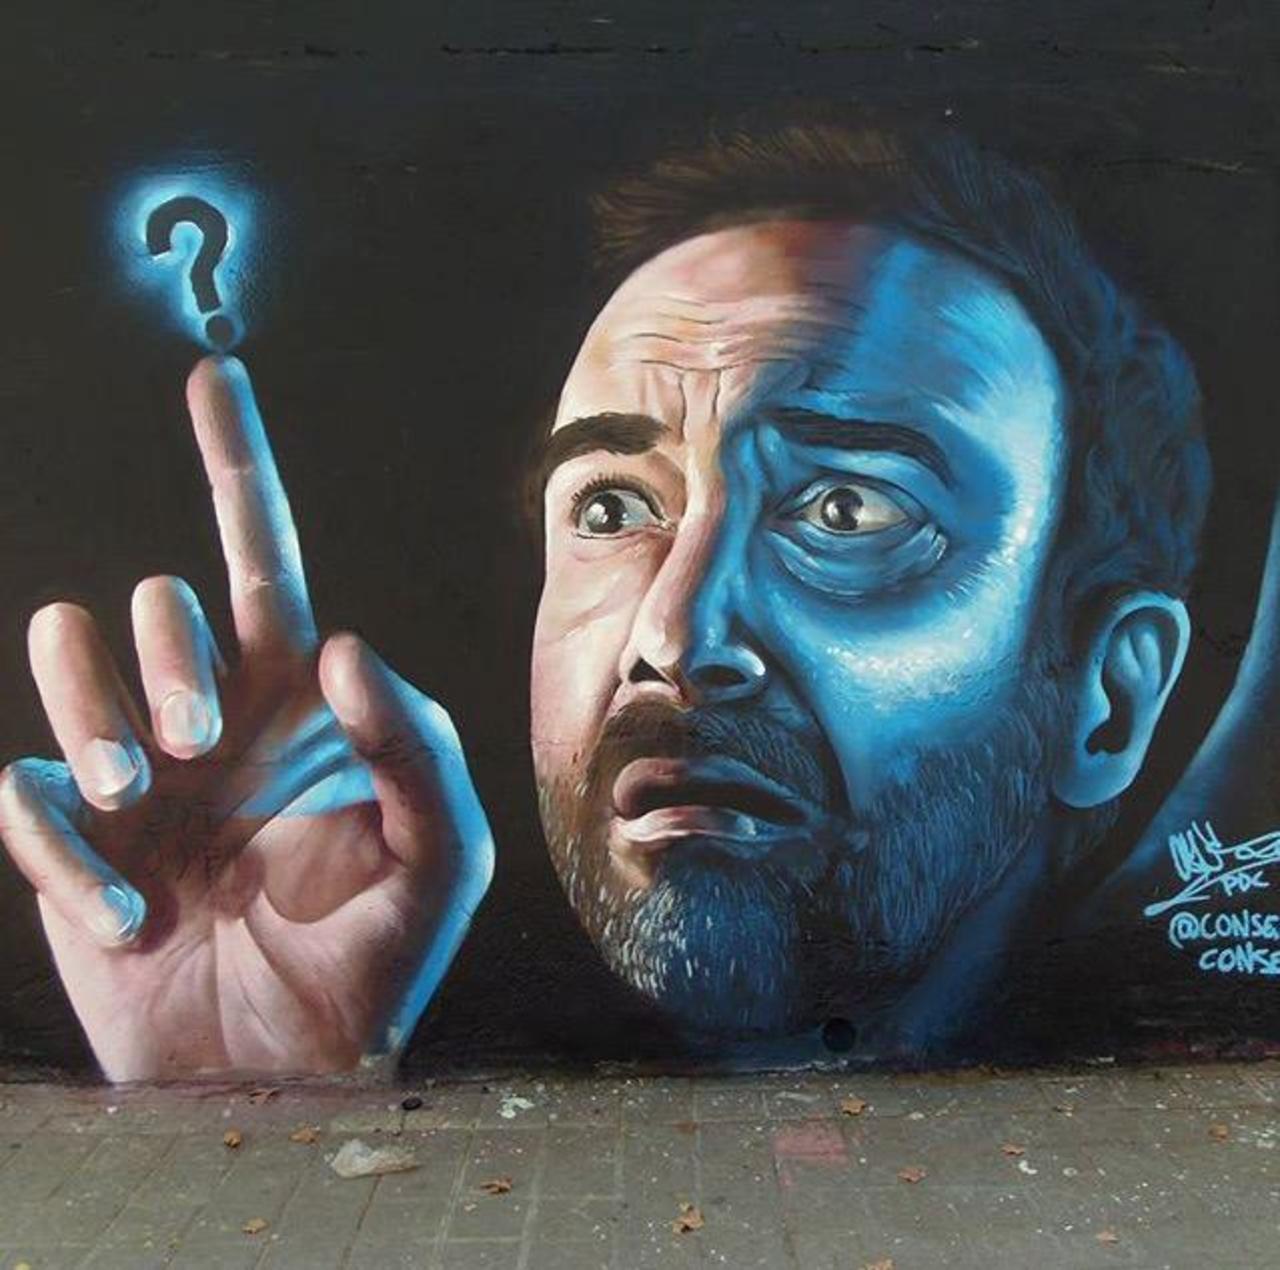 RT belilac "RT belilac "New Street Art by Conse

#art #graffiti #mural #streetart http://t.co/T2HZn9Etn9""